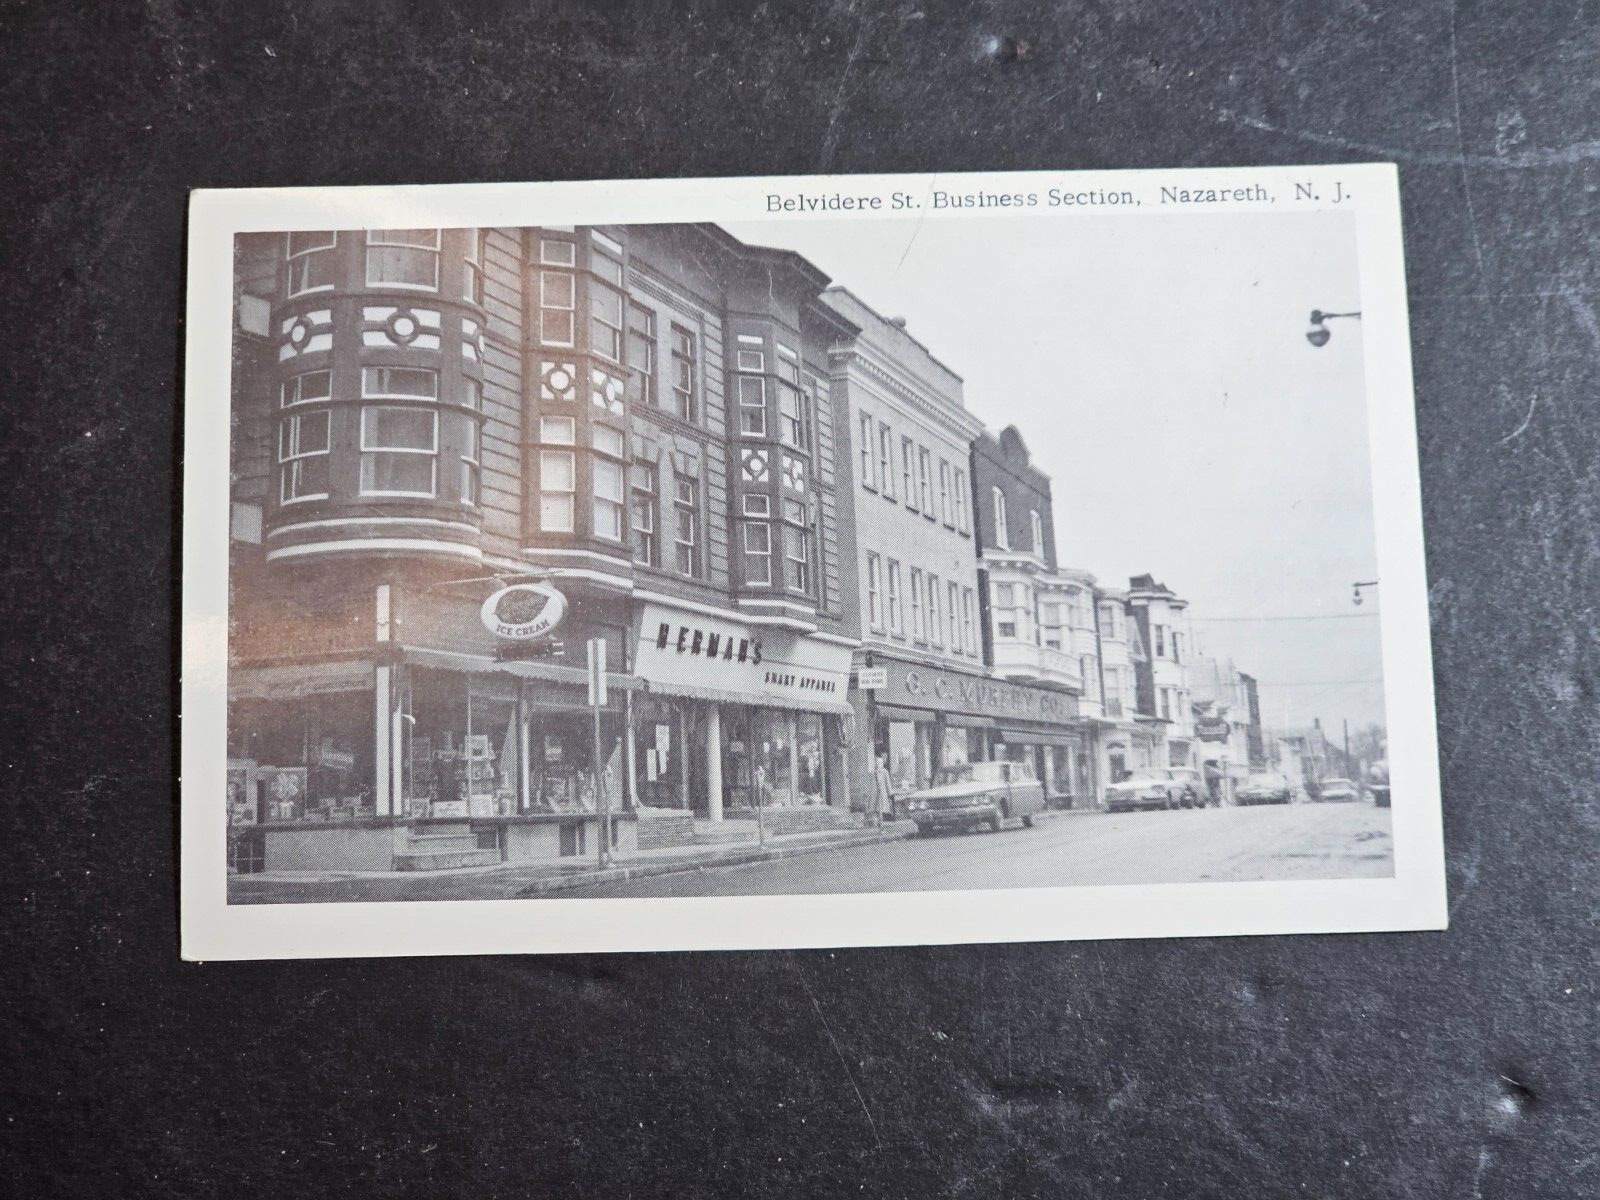 Nazareth Pa postcard 1950s/60s belvidere street